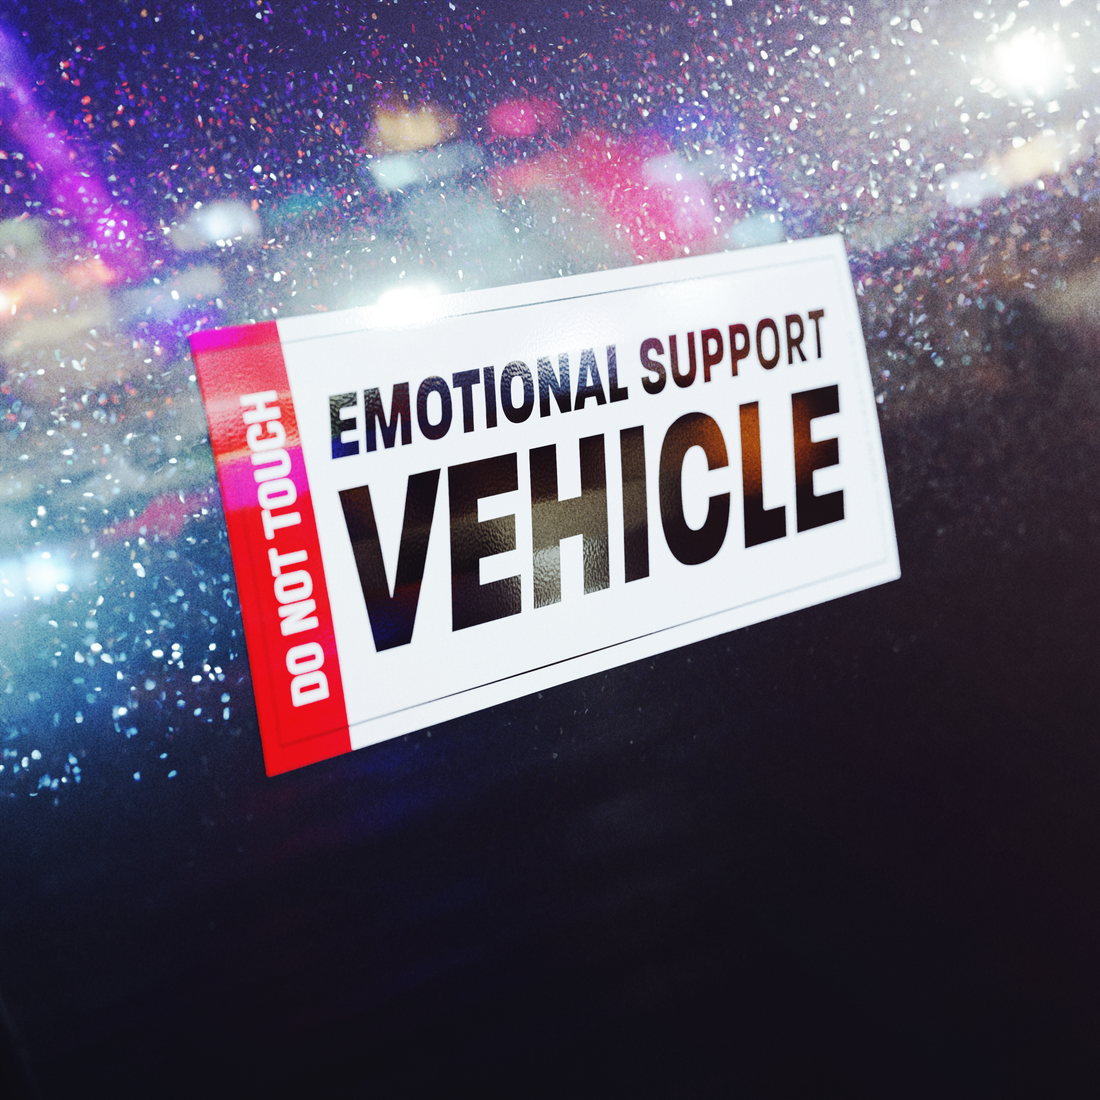 Emotional Support vehicle Slapsticker